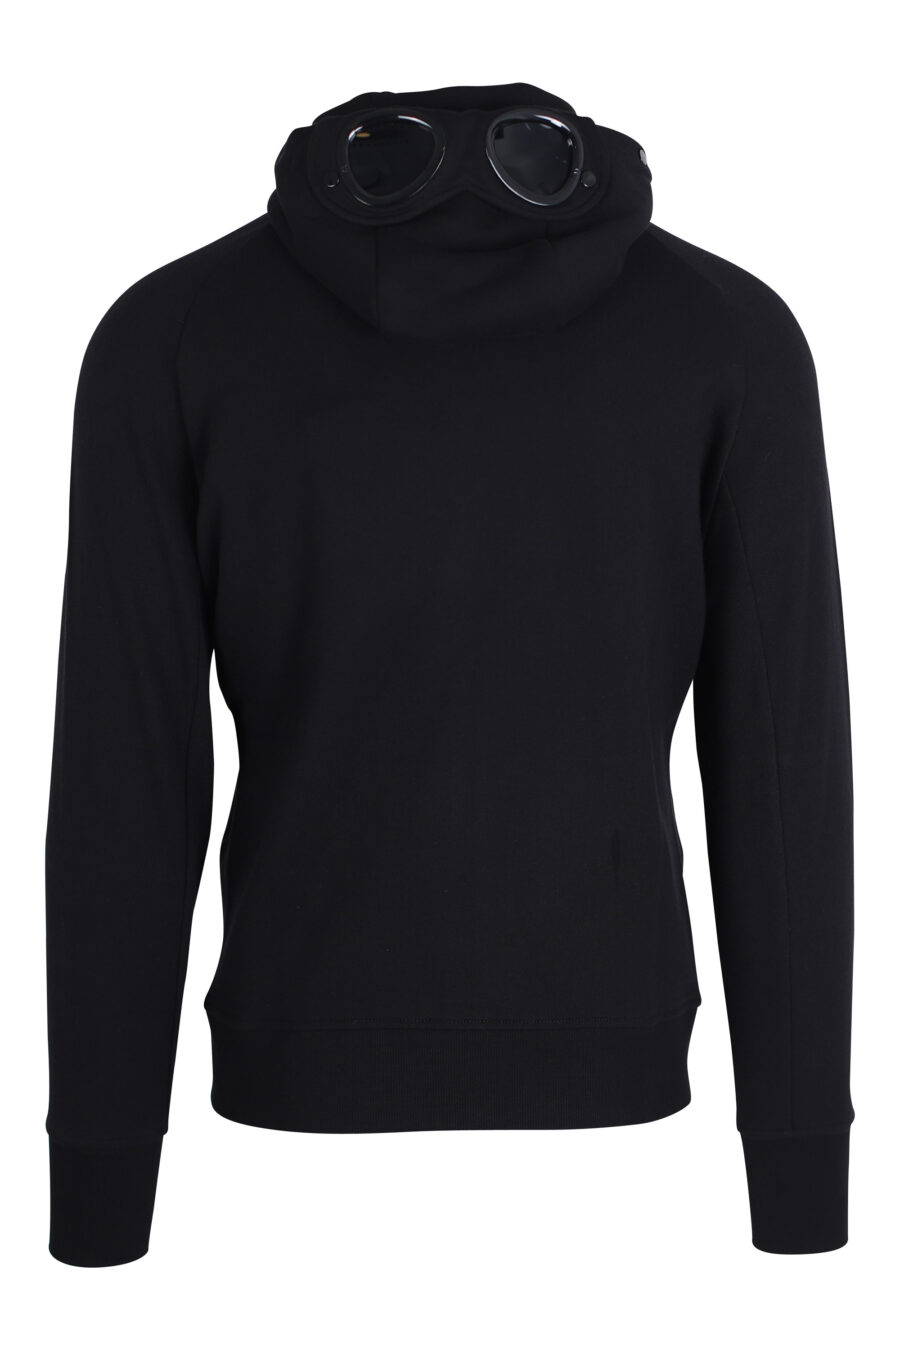 Black sweatshirt with adjustable glasses hood - IMG 2436